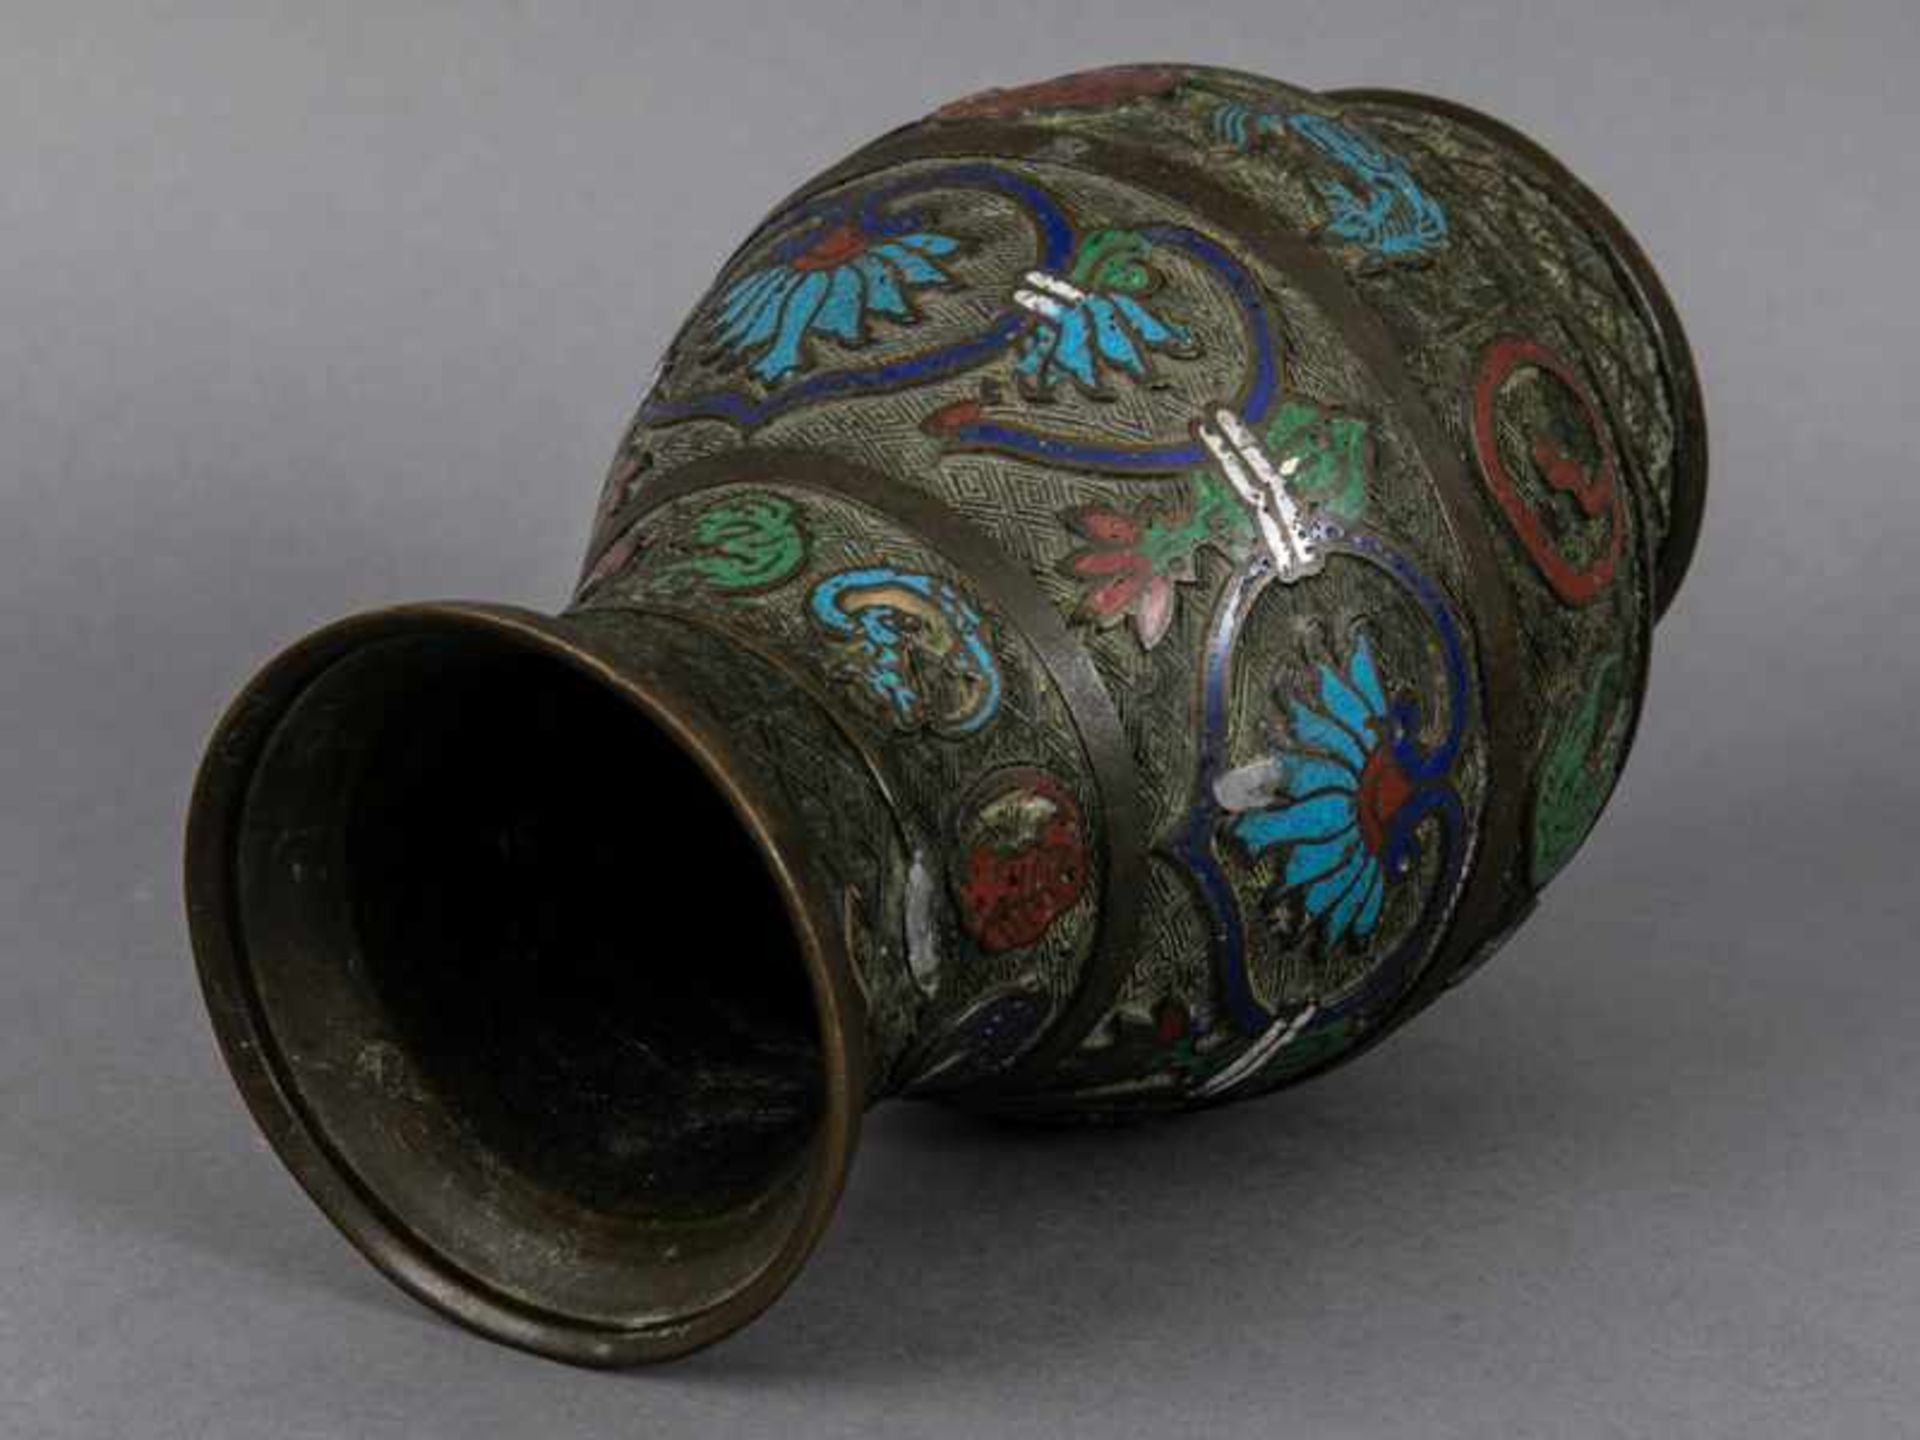 Vase mit Emaille-Cloisonné-Dekor, China, wohl 19. Jh. Vase mit Emaille-Cloisonné-Dekor, China, wohl - Bild 3 aus 4